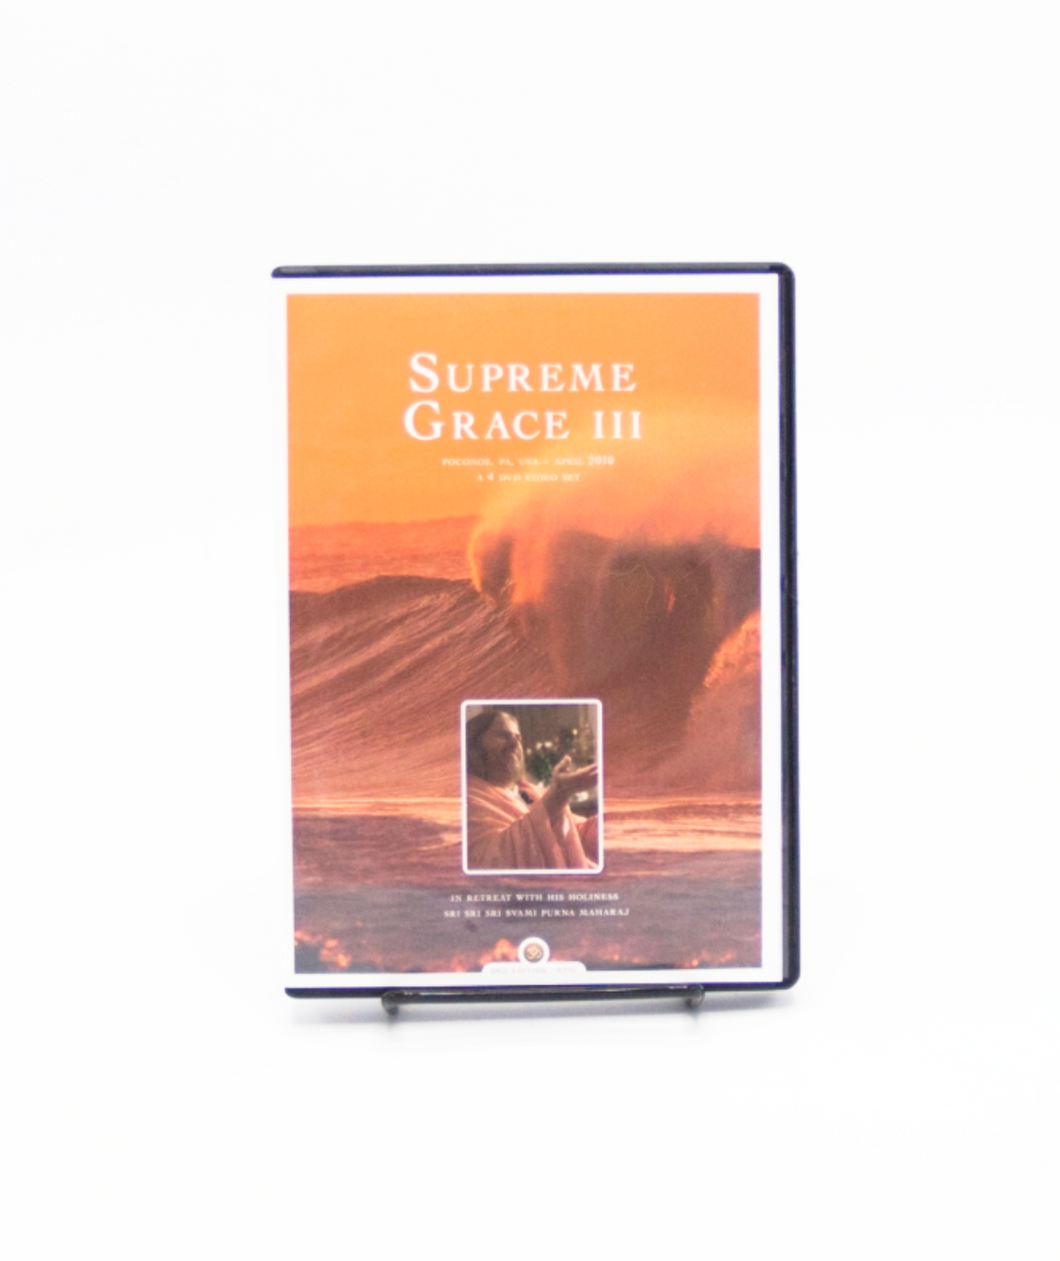 Supreme Grace III DVD